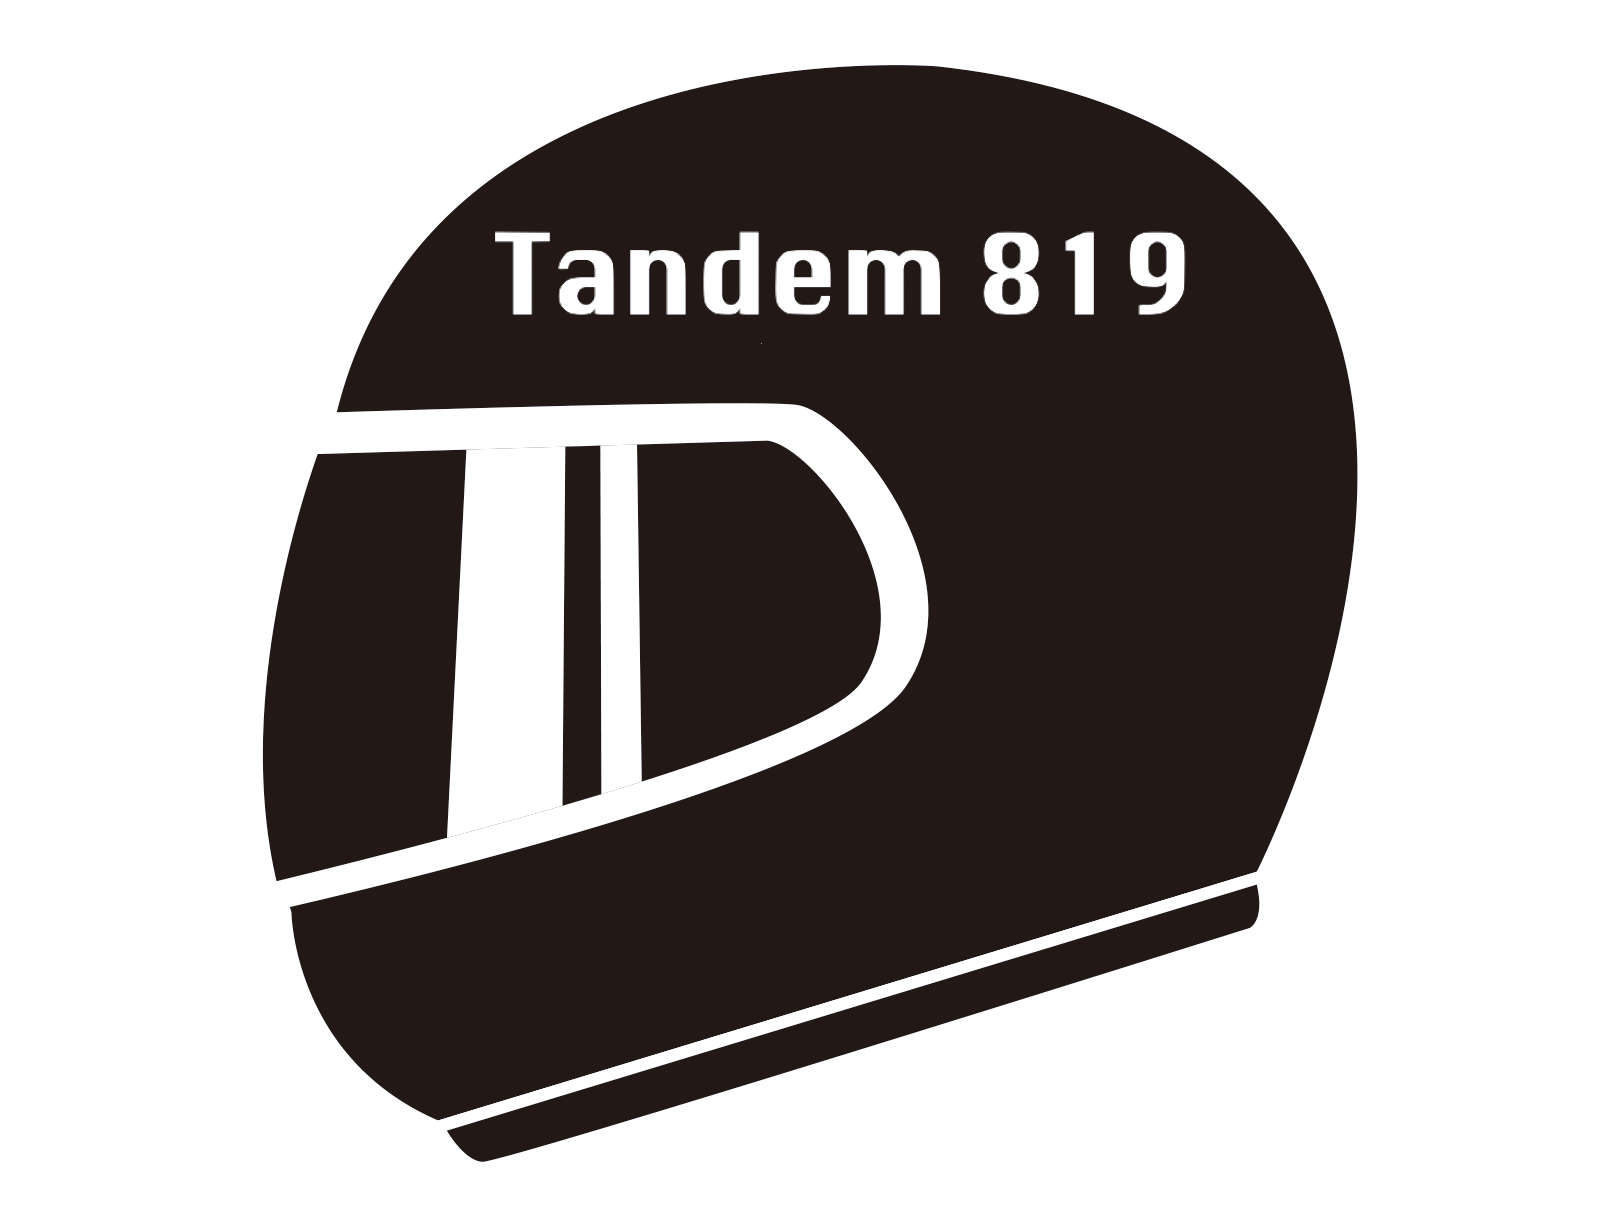 Tandem 819